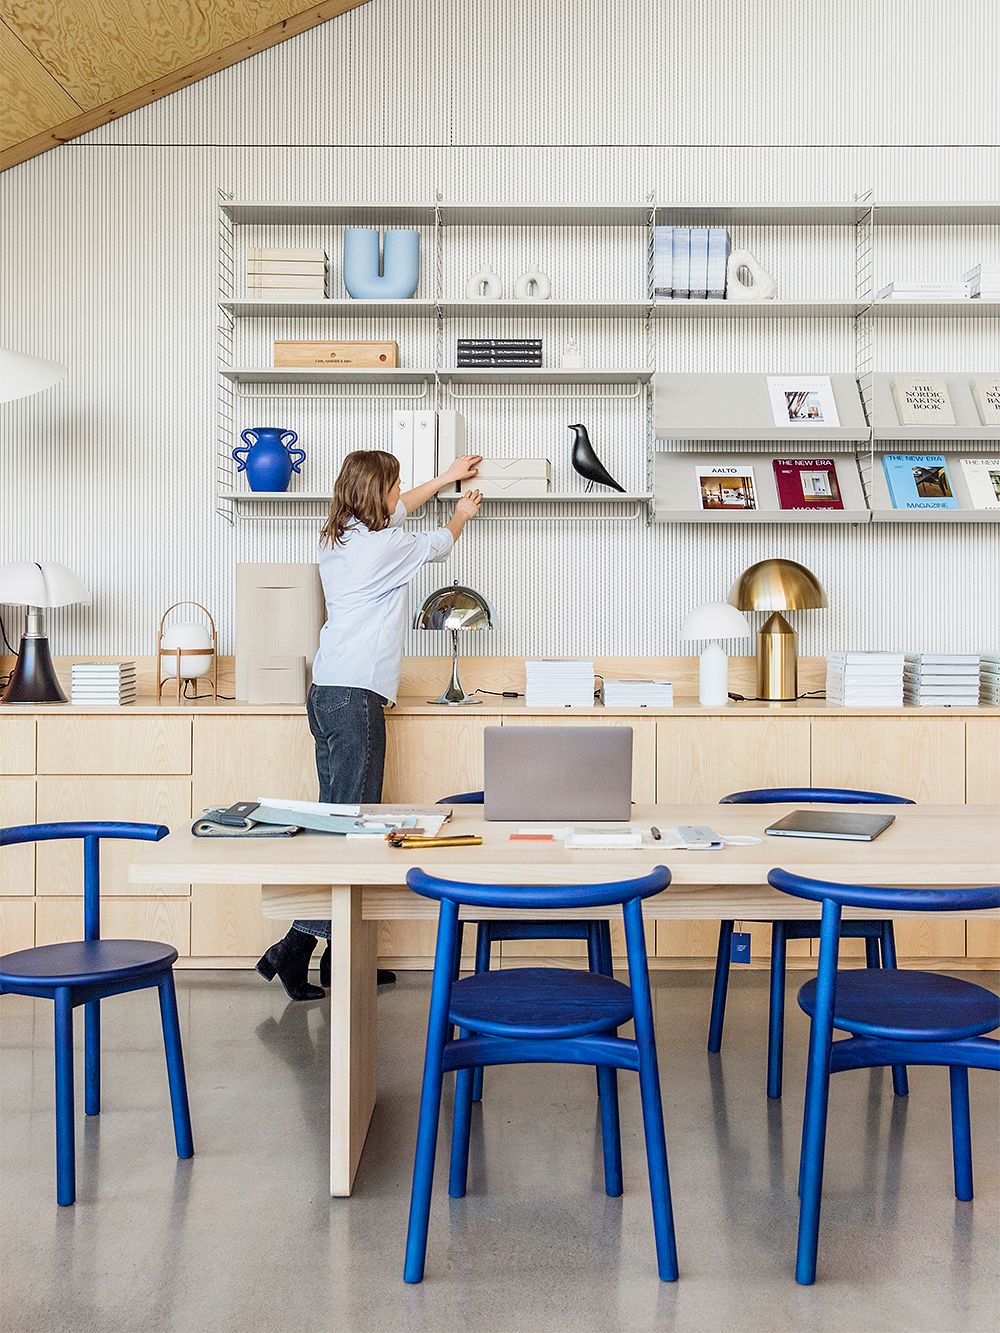 An image of Finnish Design Shop's showroom, featuring interior architect Maija Rasila.